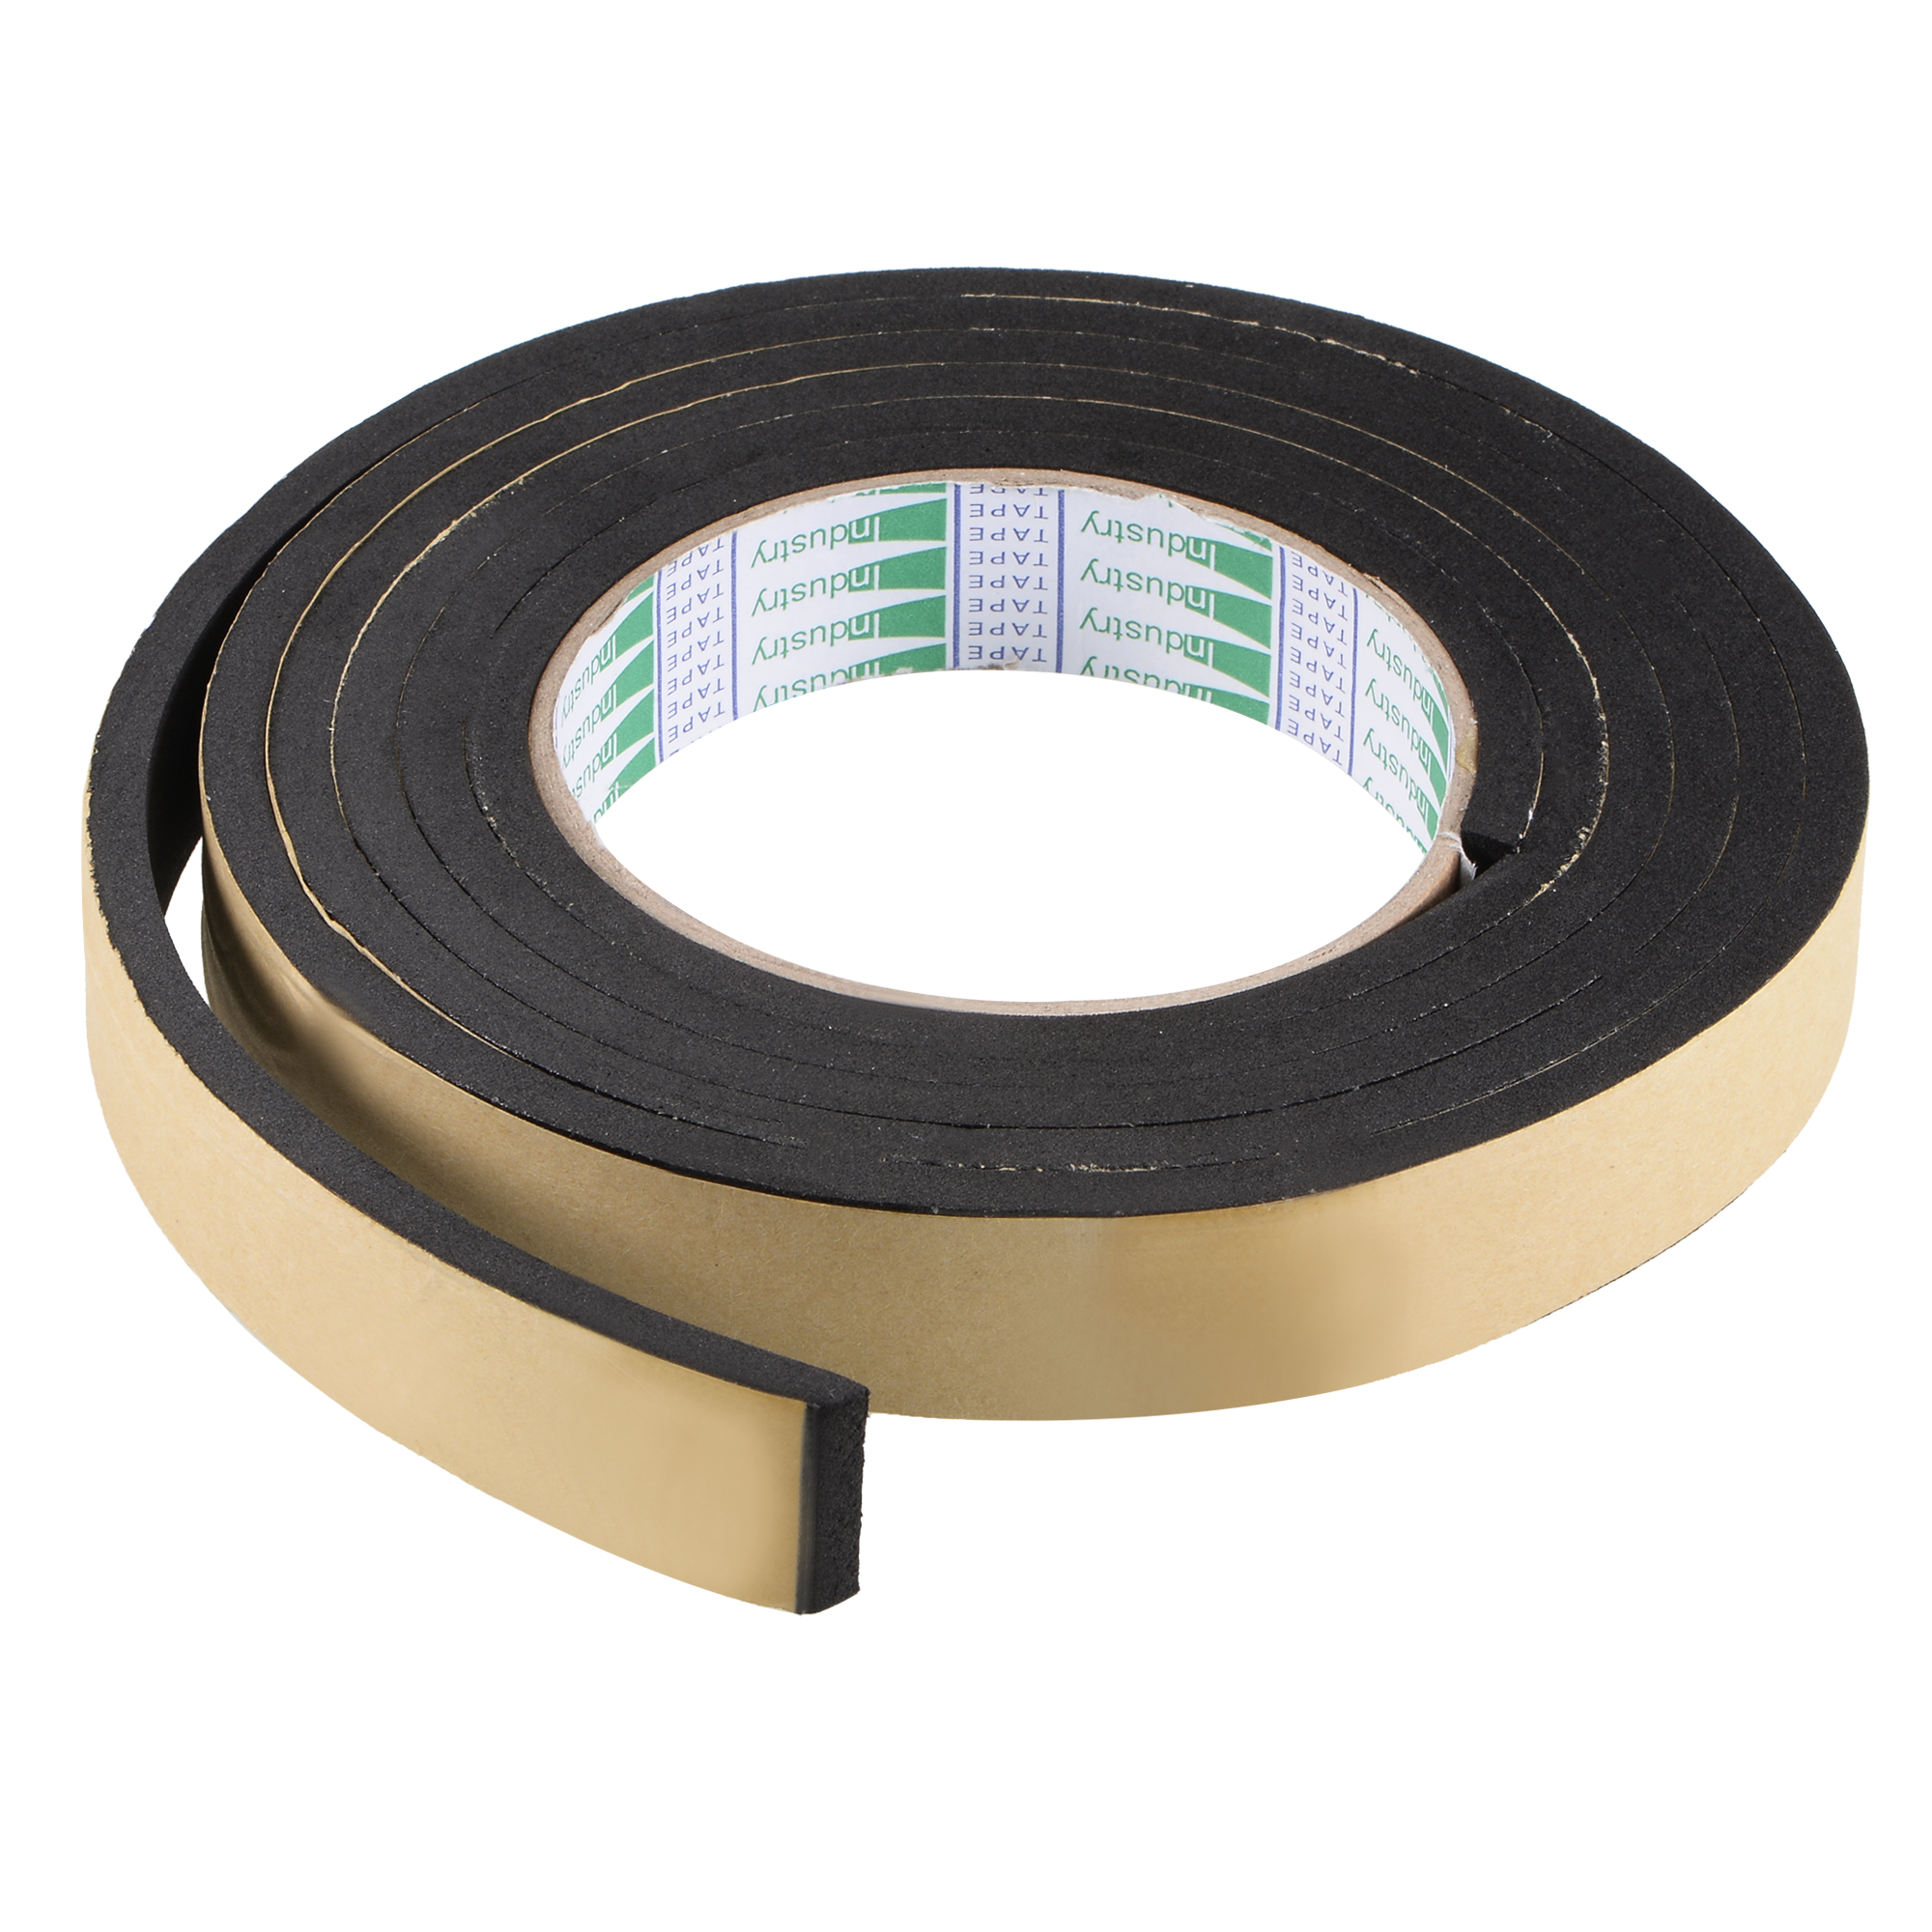 Uxcell Eva Self Adhesive Foam Tape Weather Strip for Window Door Insulation 0.78 inchx0.2 inchx6.56ft, Size: 20mmx5mmx2m, Black